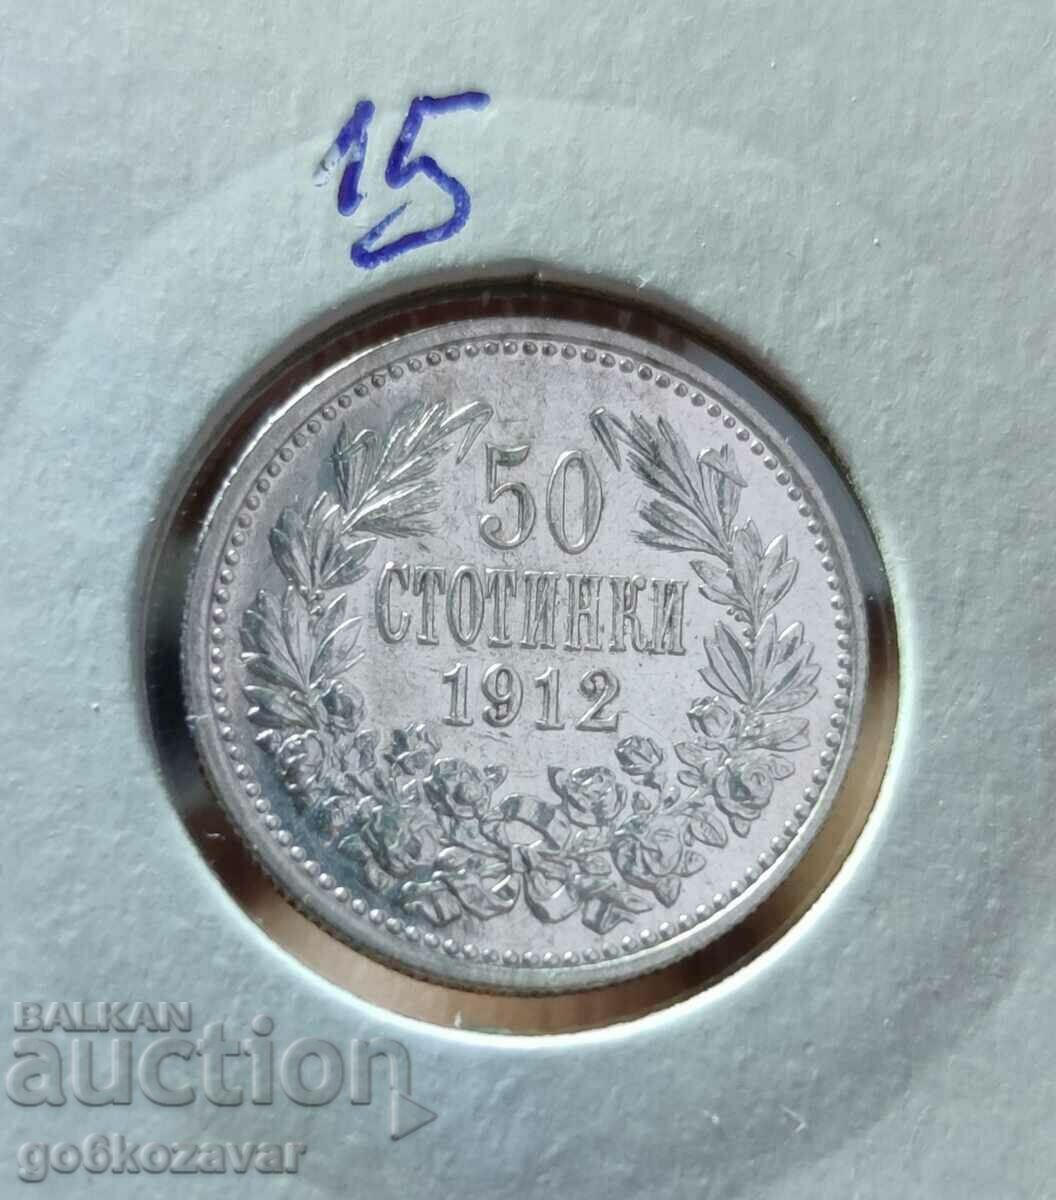 Bulgaria 50 de cenți, 1912 Argint Colectie UNC!